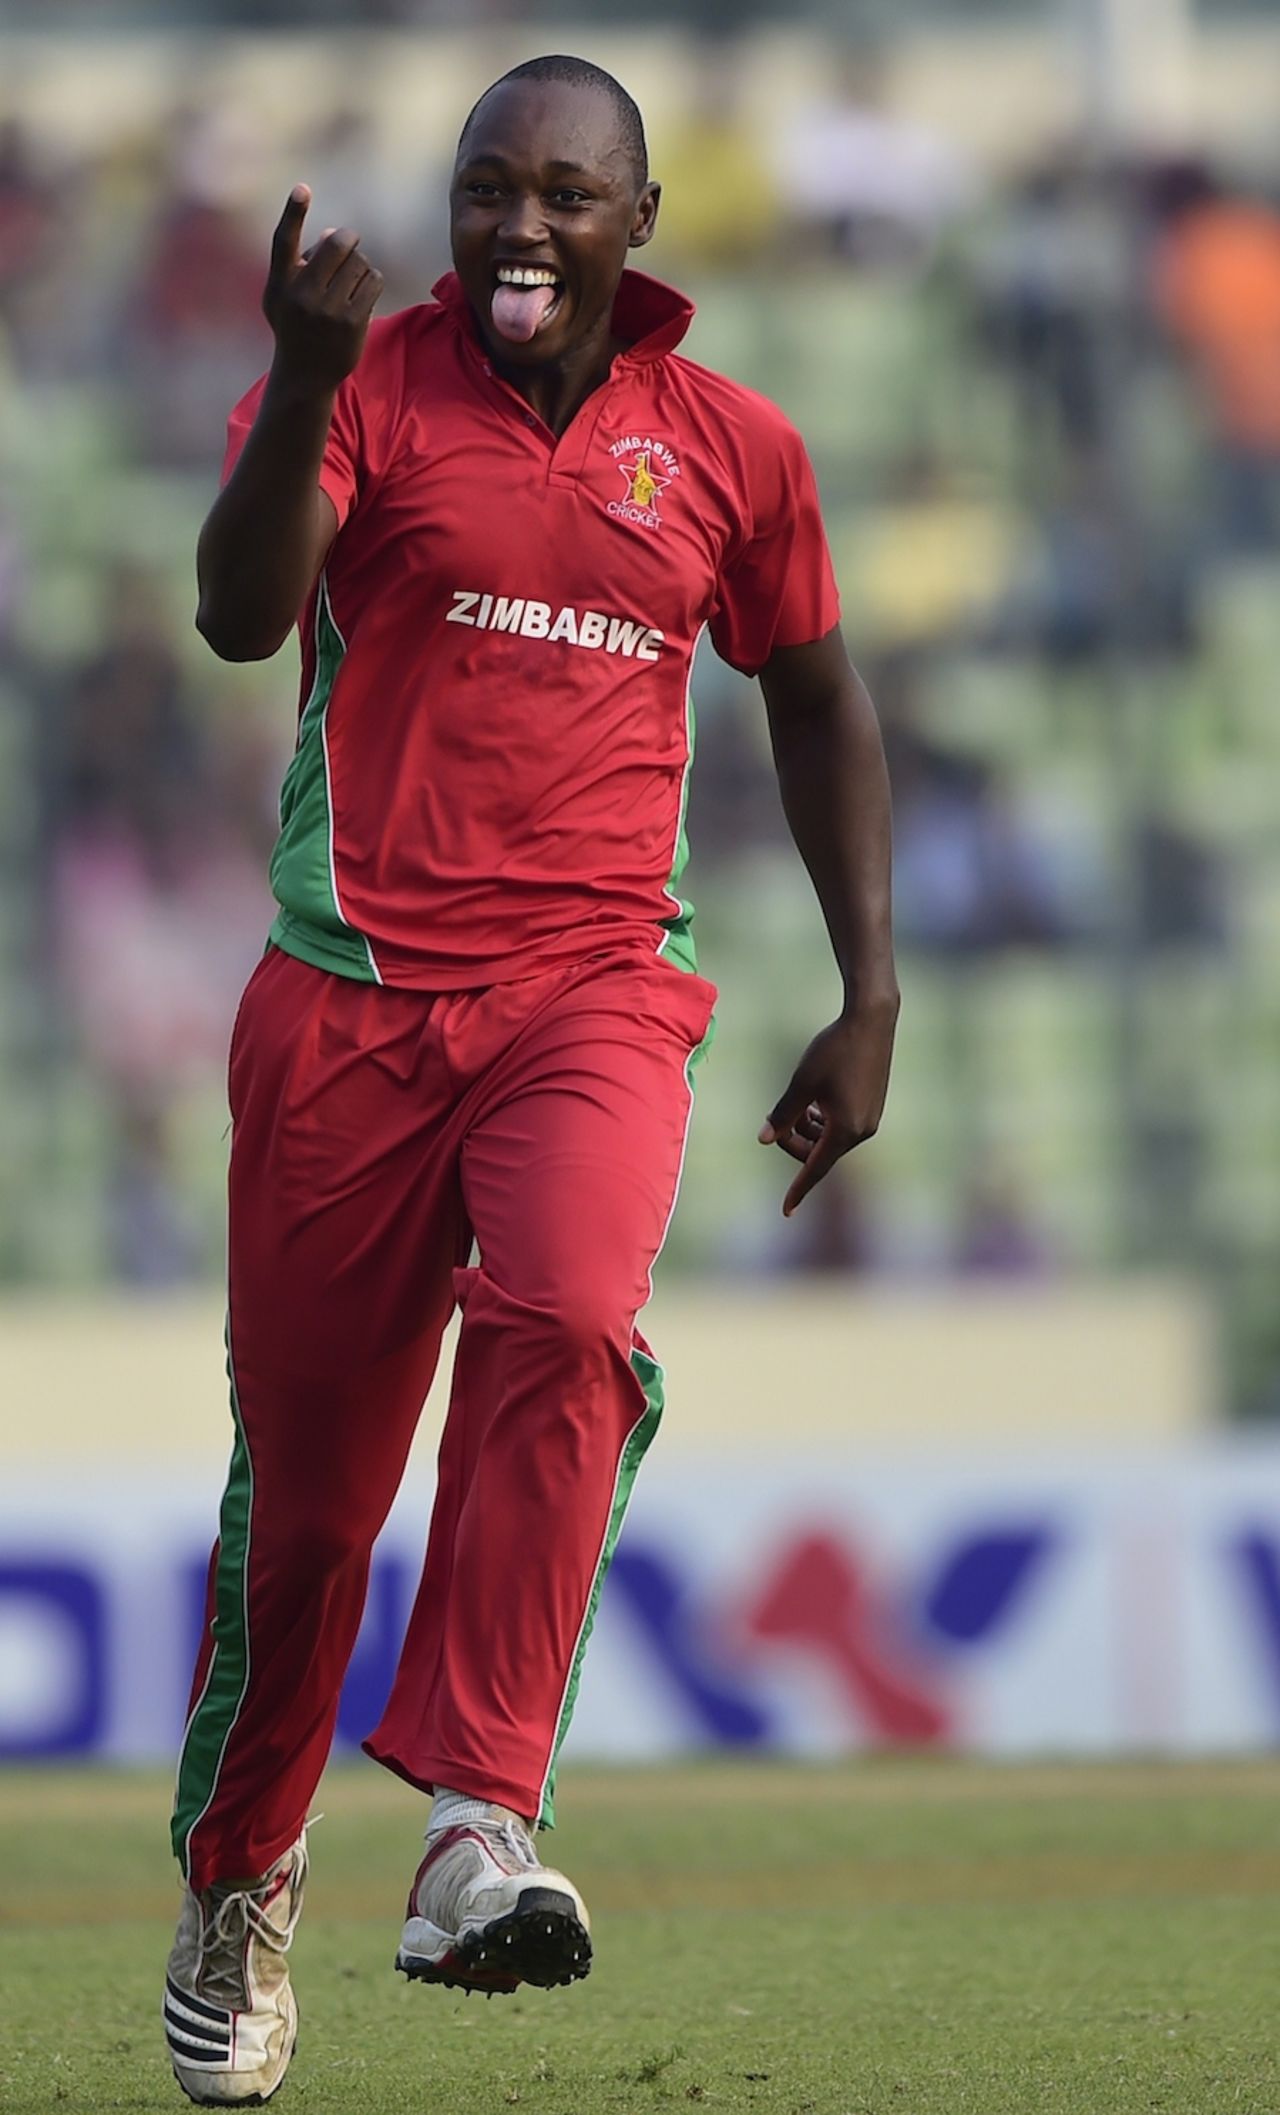 Tendai Chatara is all smiles after a wicket, Bangladesh v Zimbabwe, 5th ODI, Mirpur, December 1, 2014